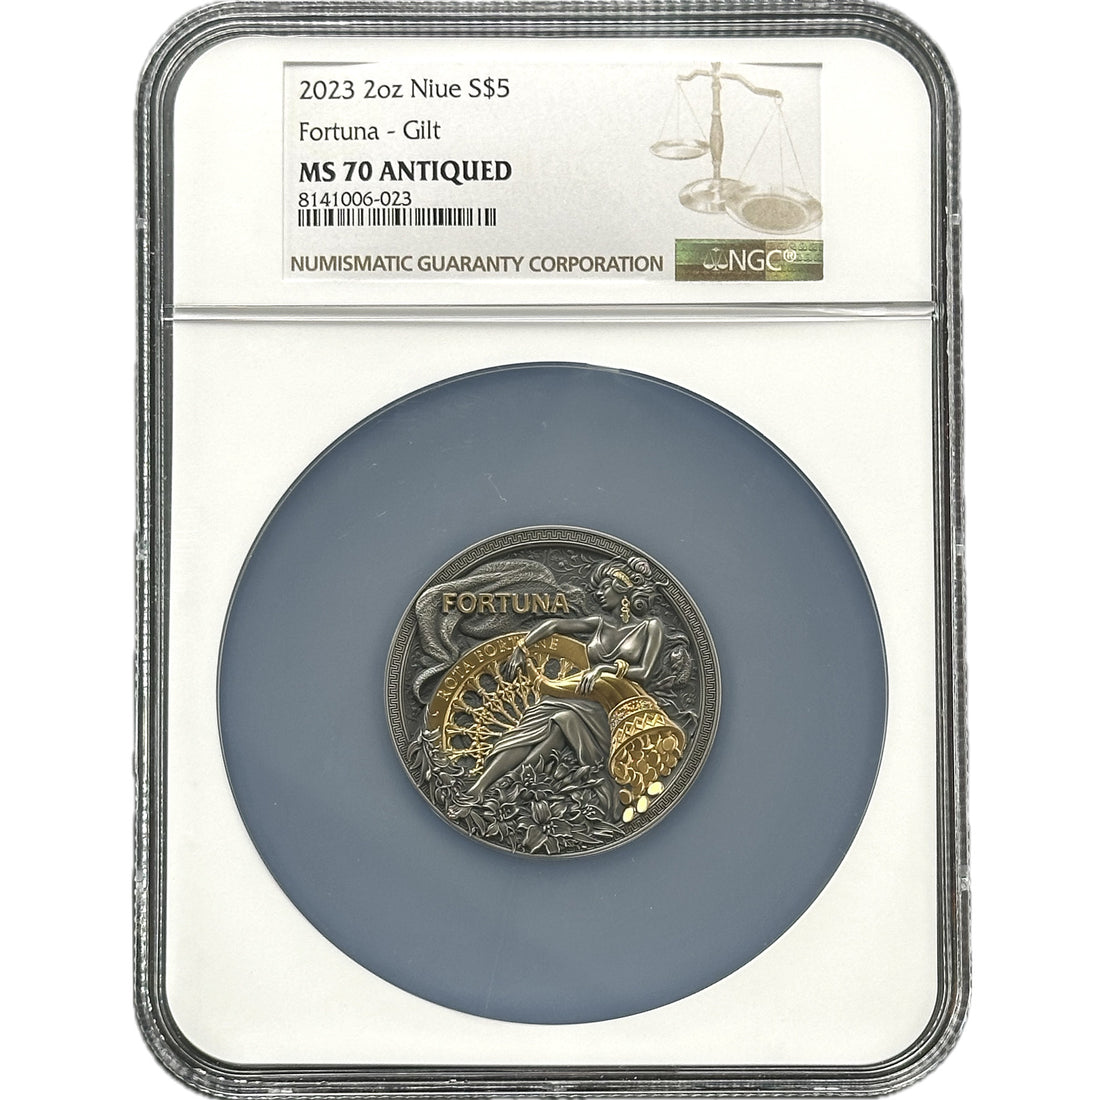 2023 Niue FORTUNA $5 Gilt 2 oz Silver Antique Coin MS 70 - OZB